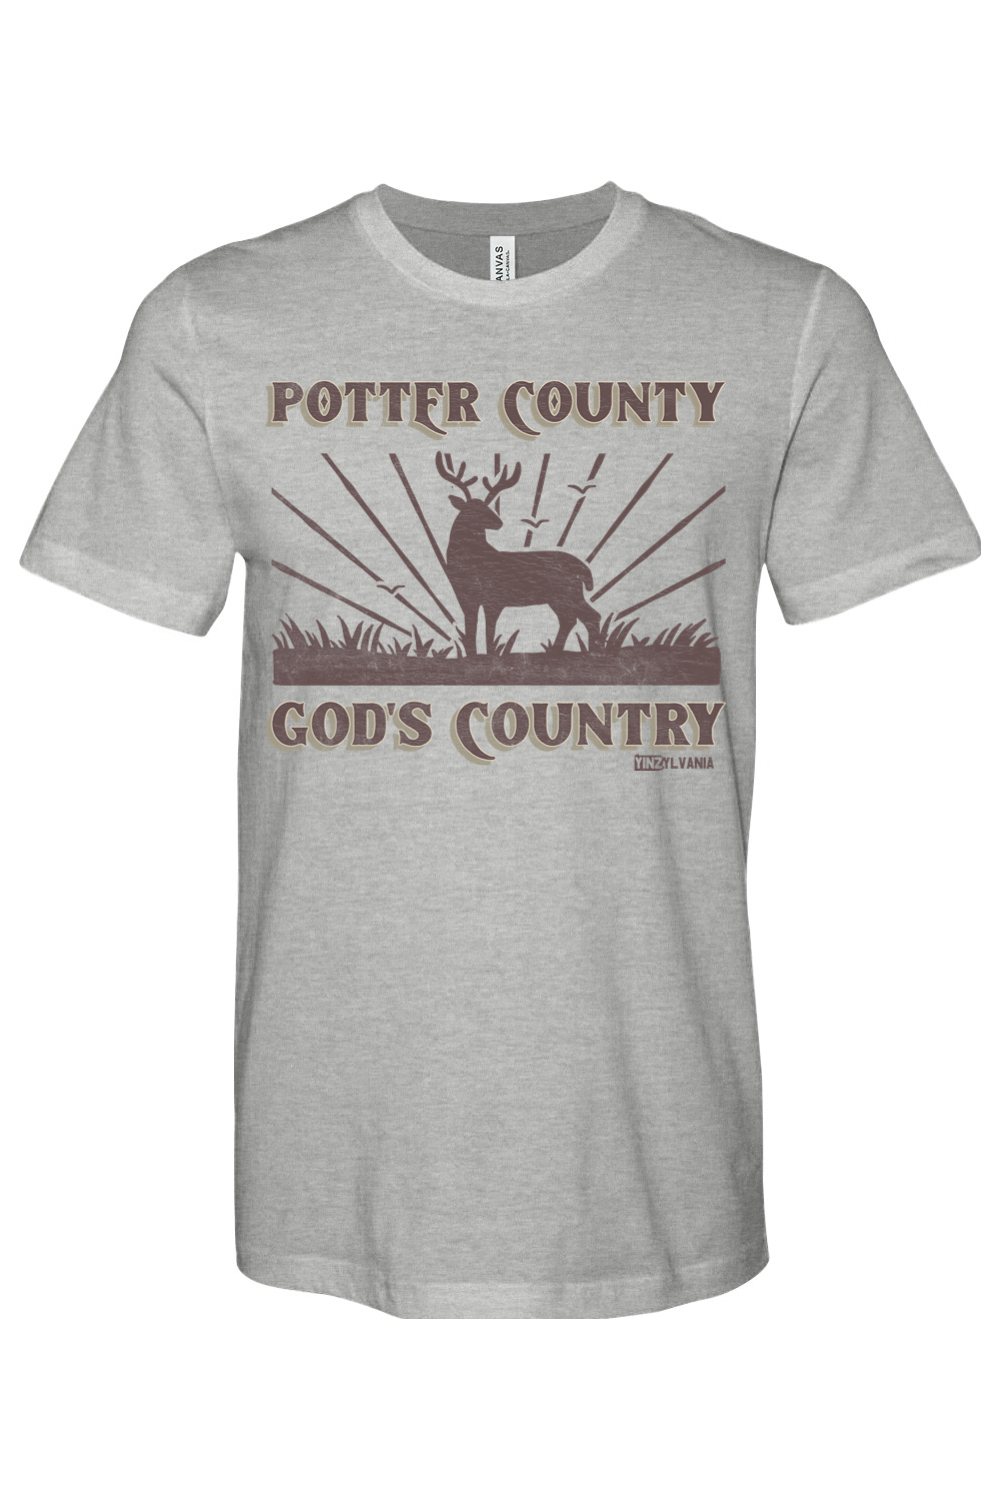 Potter County - God's Country - Yinzylvania